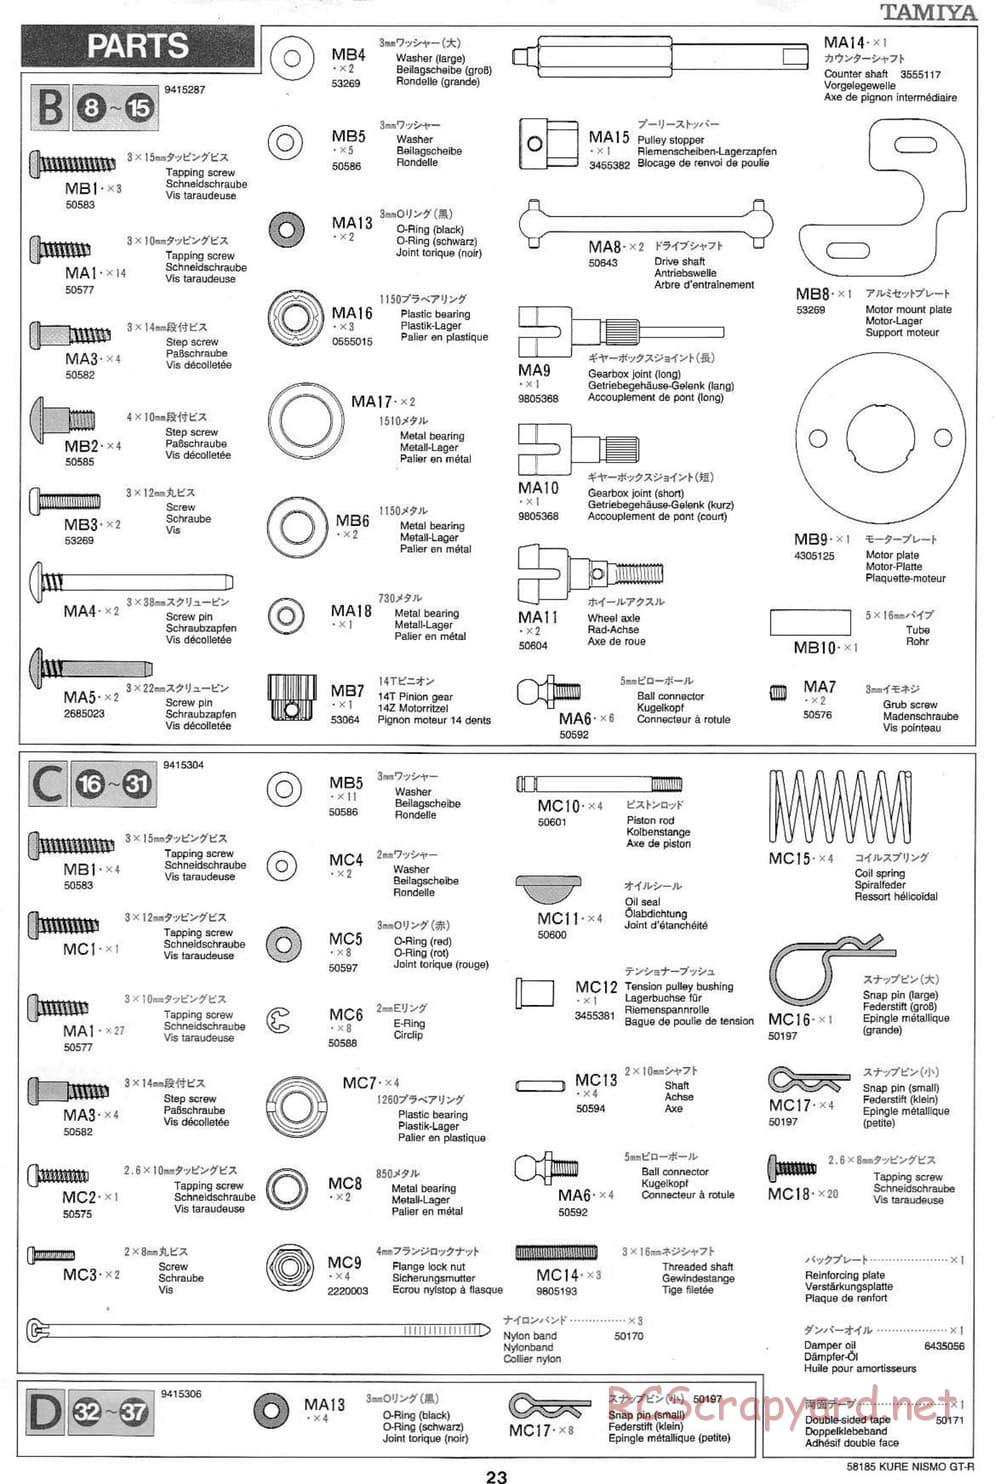 Tamiya - Kure Nismo GT-R - TA-03F Chassis - Manual - Page 23